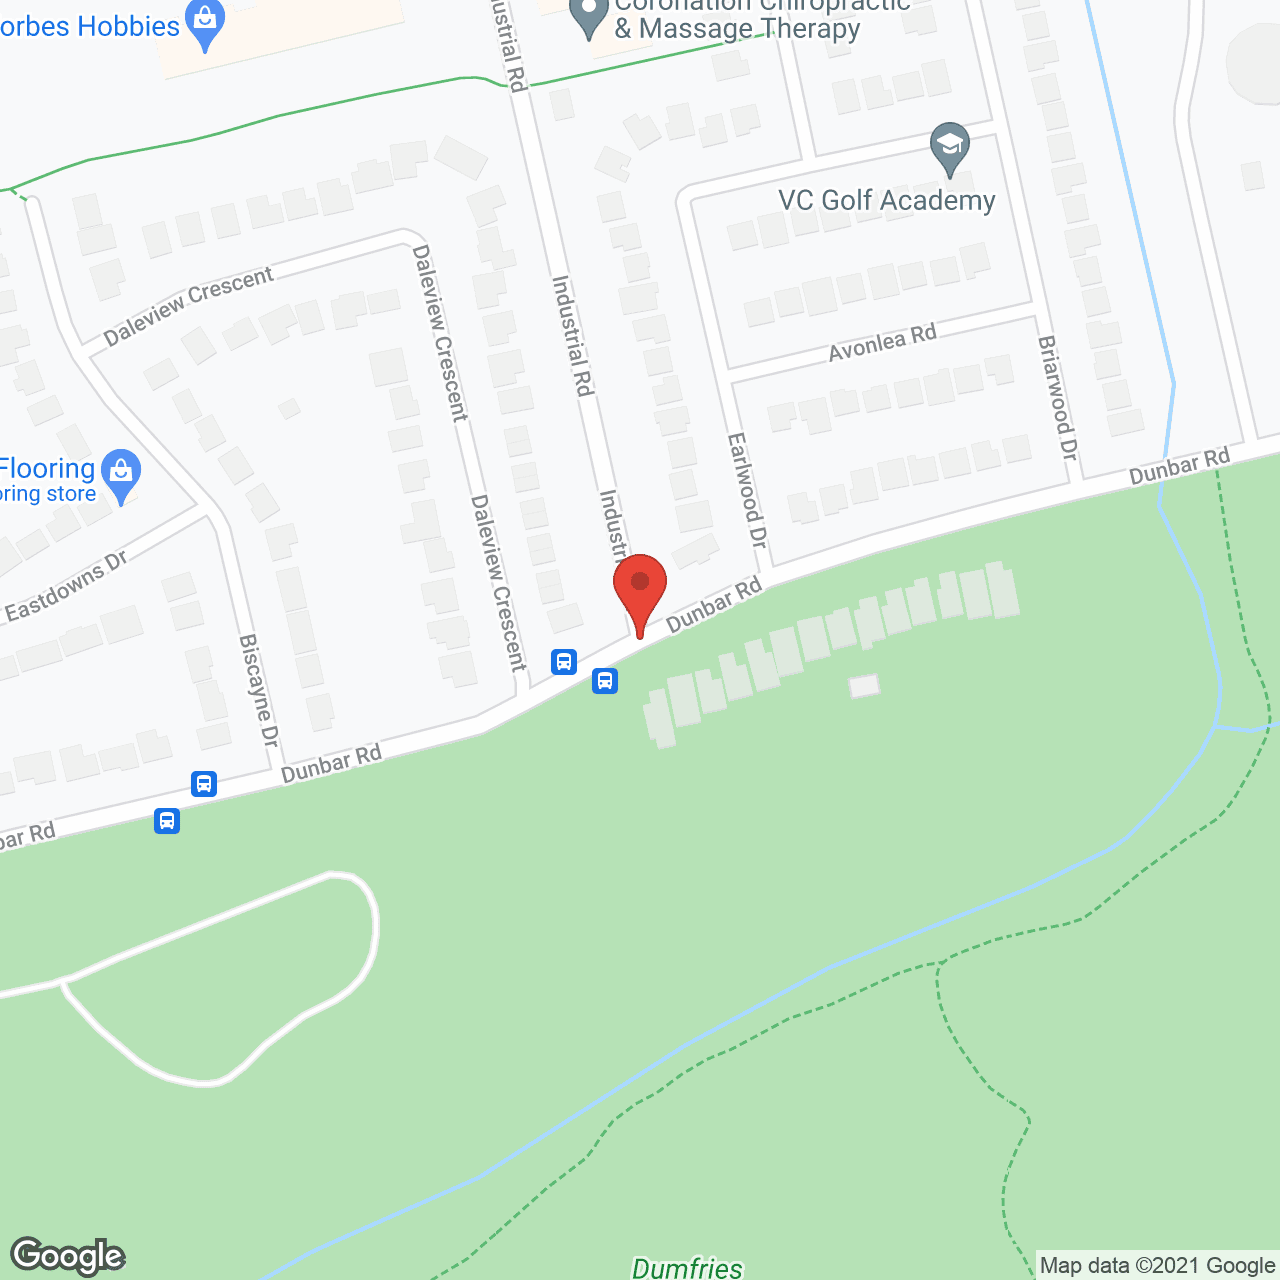 Avonlea Place in google map